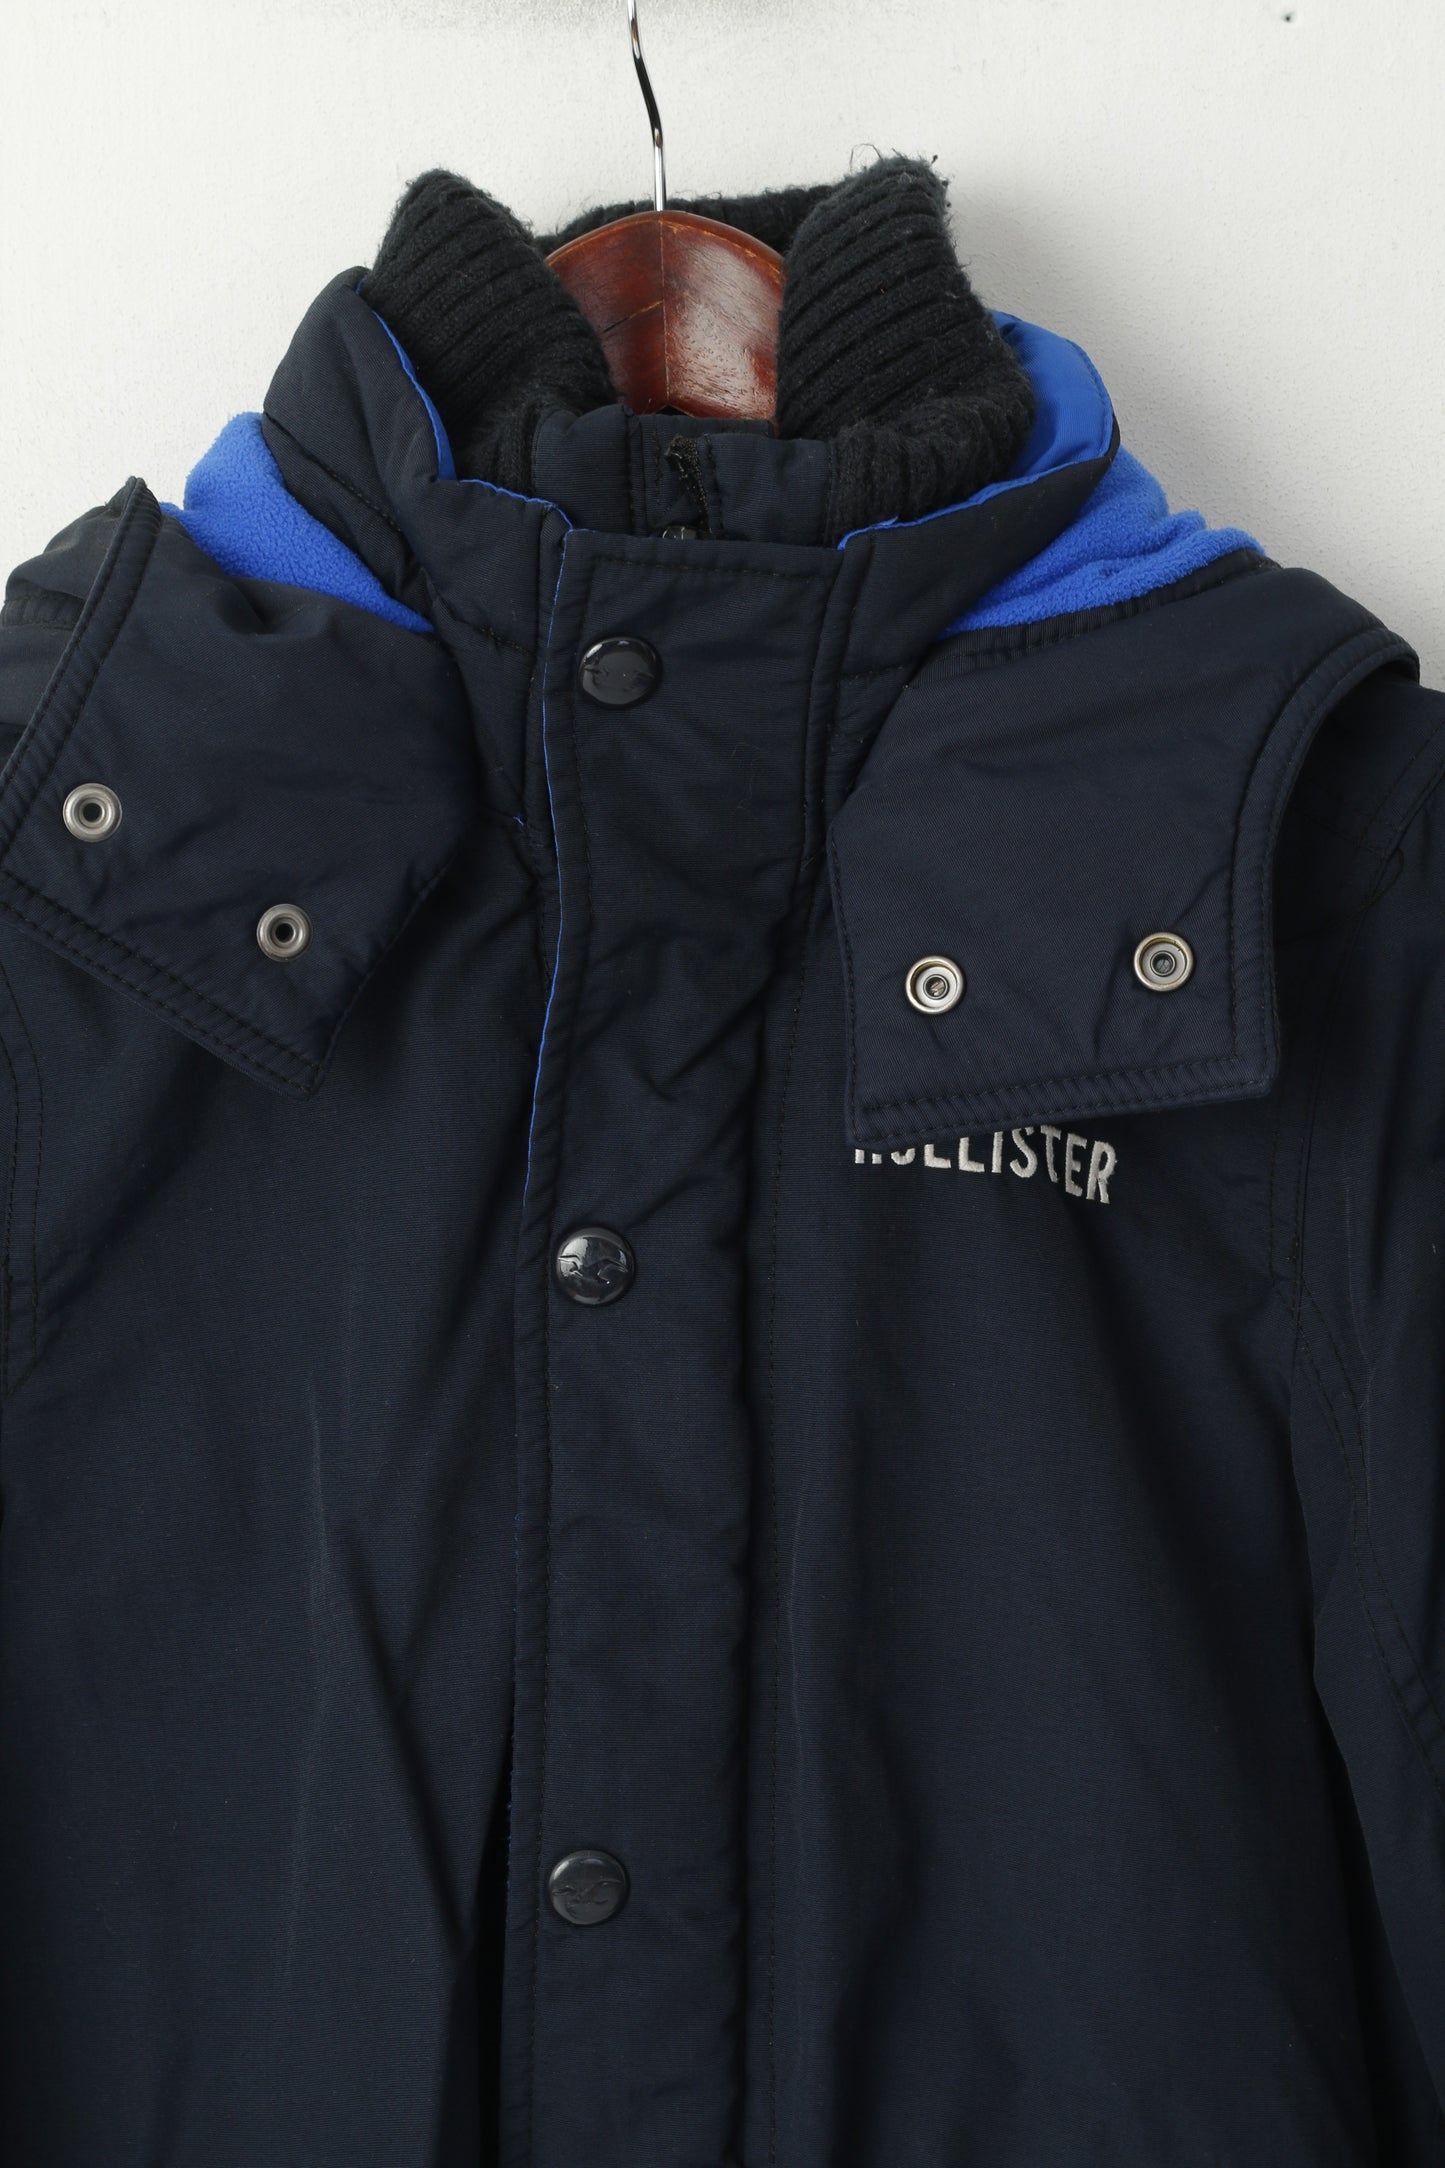 Hollister California Men S Jacket Navy Nylon Waterproof Hooded Full Zipper Casual Top